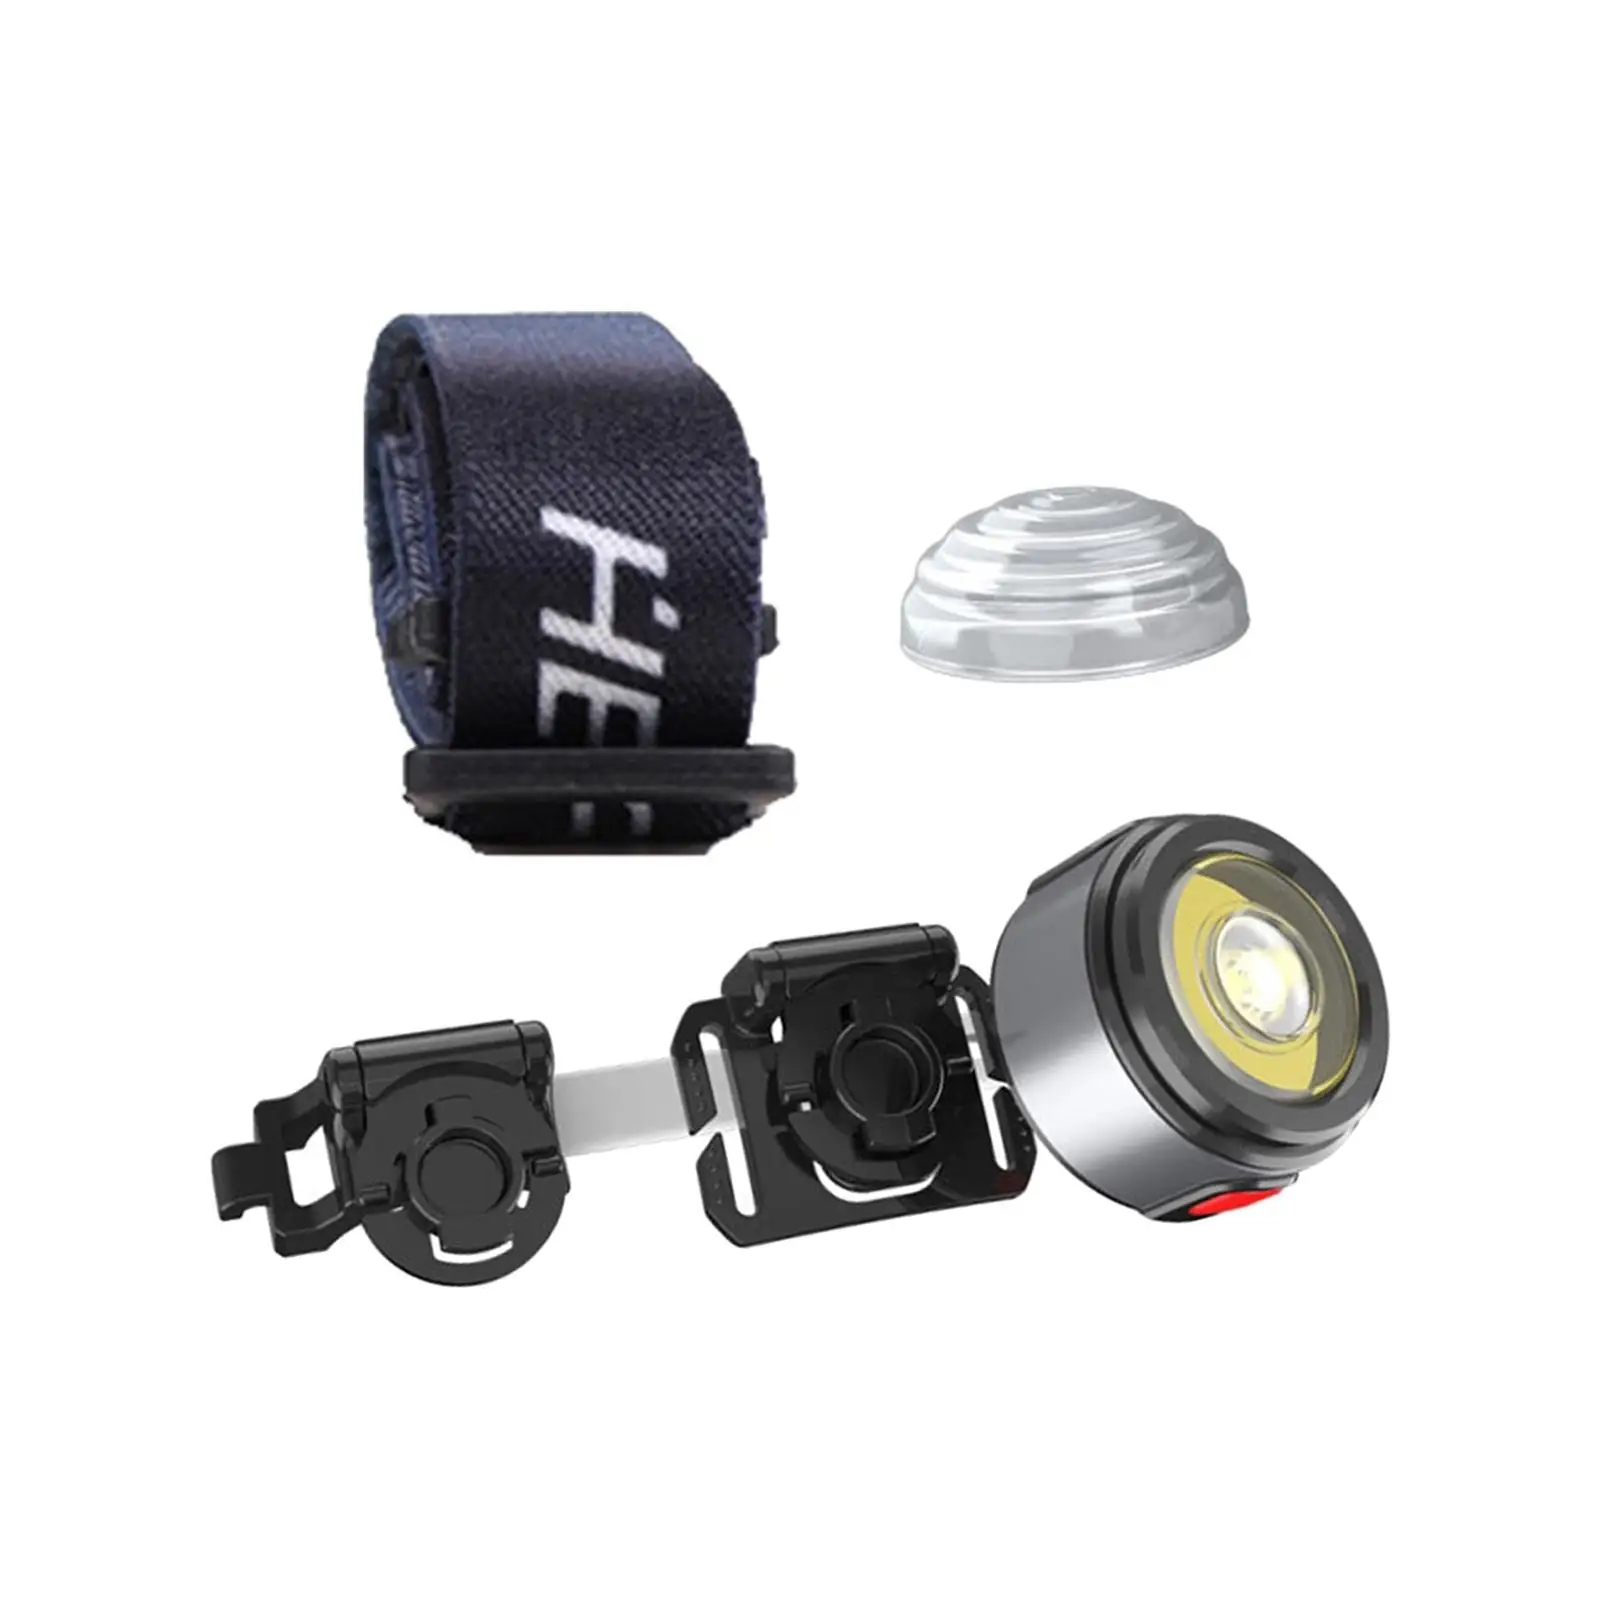 LED Flashlight Mini Tail Light for Backpacking Emergency Lighting Fishing